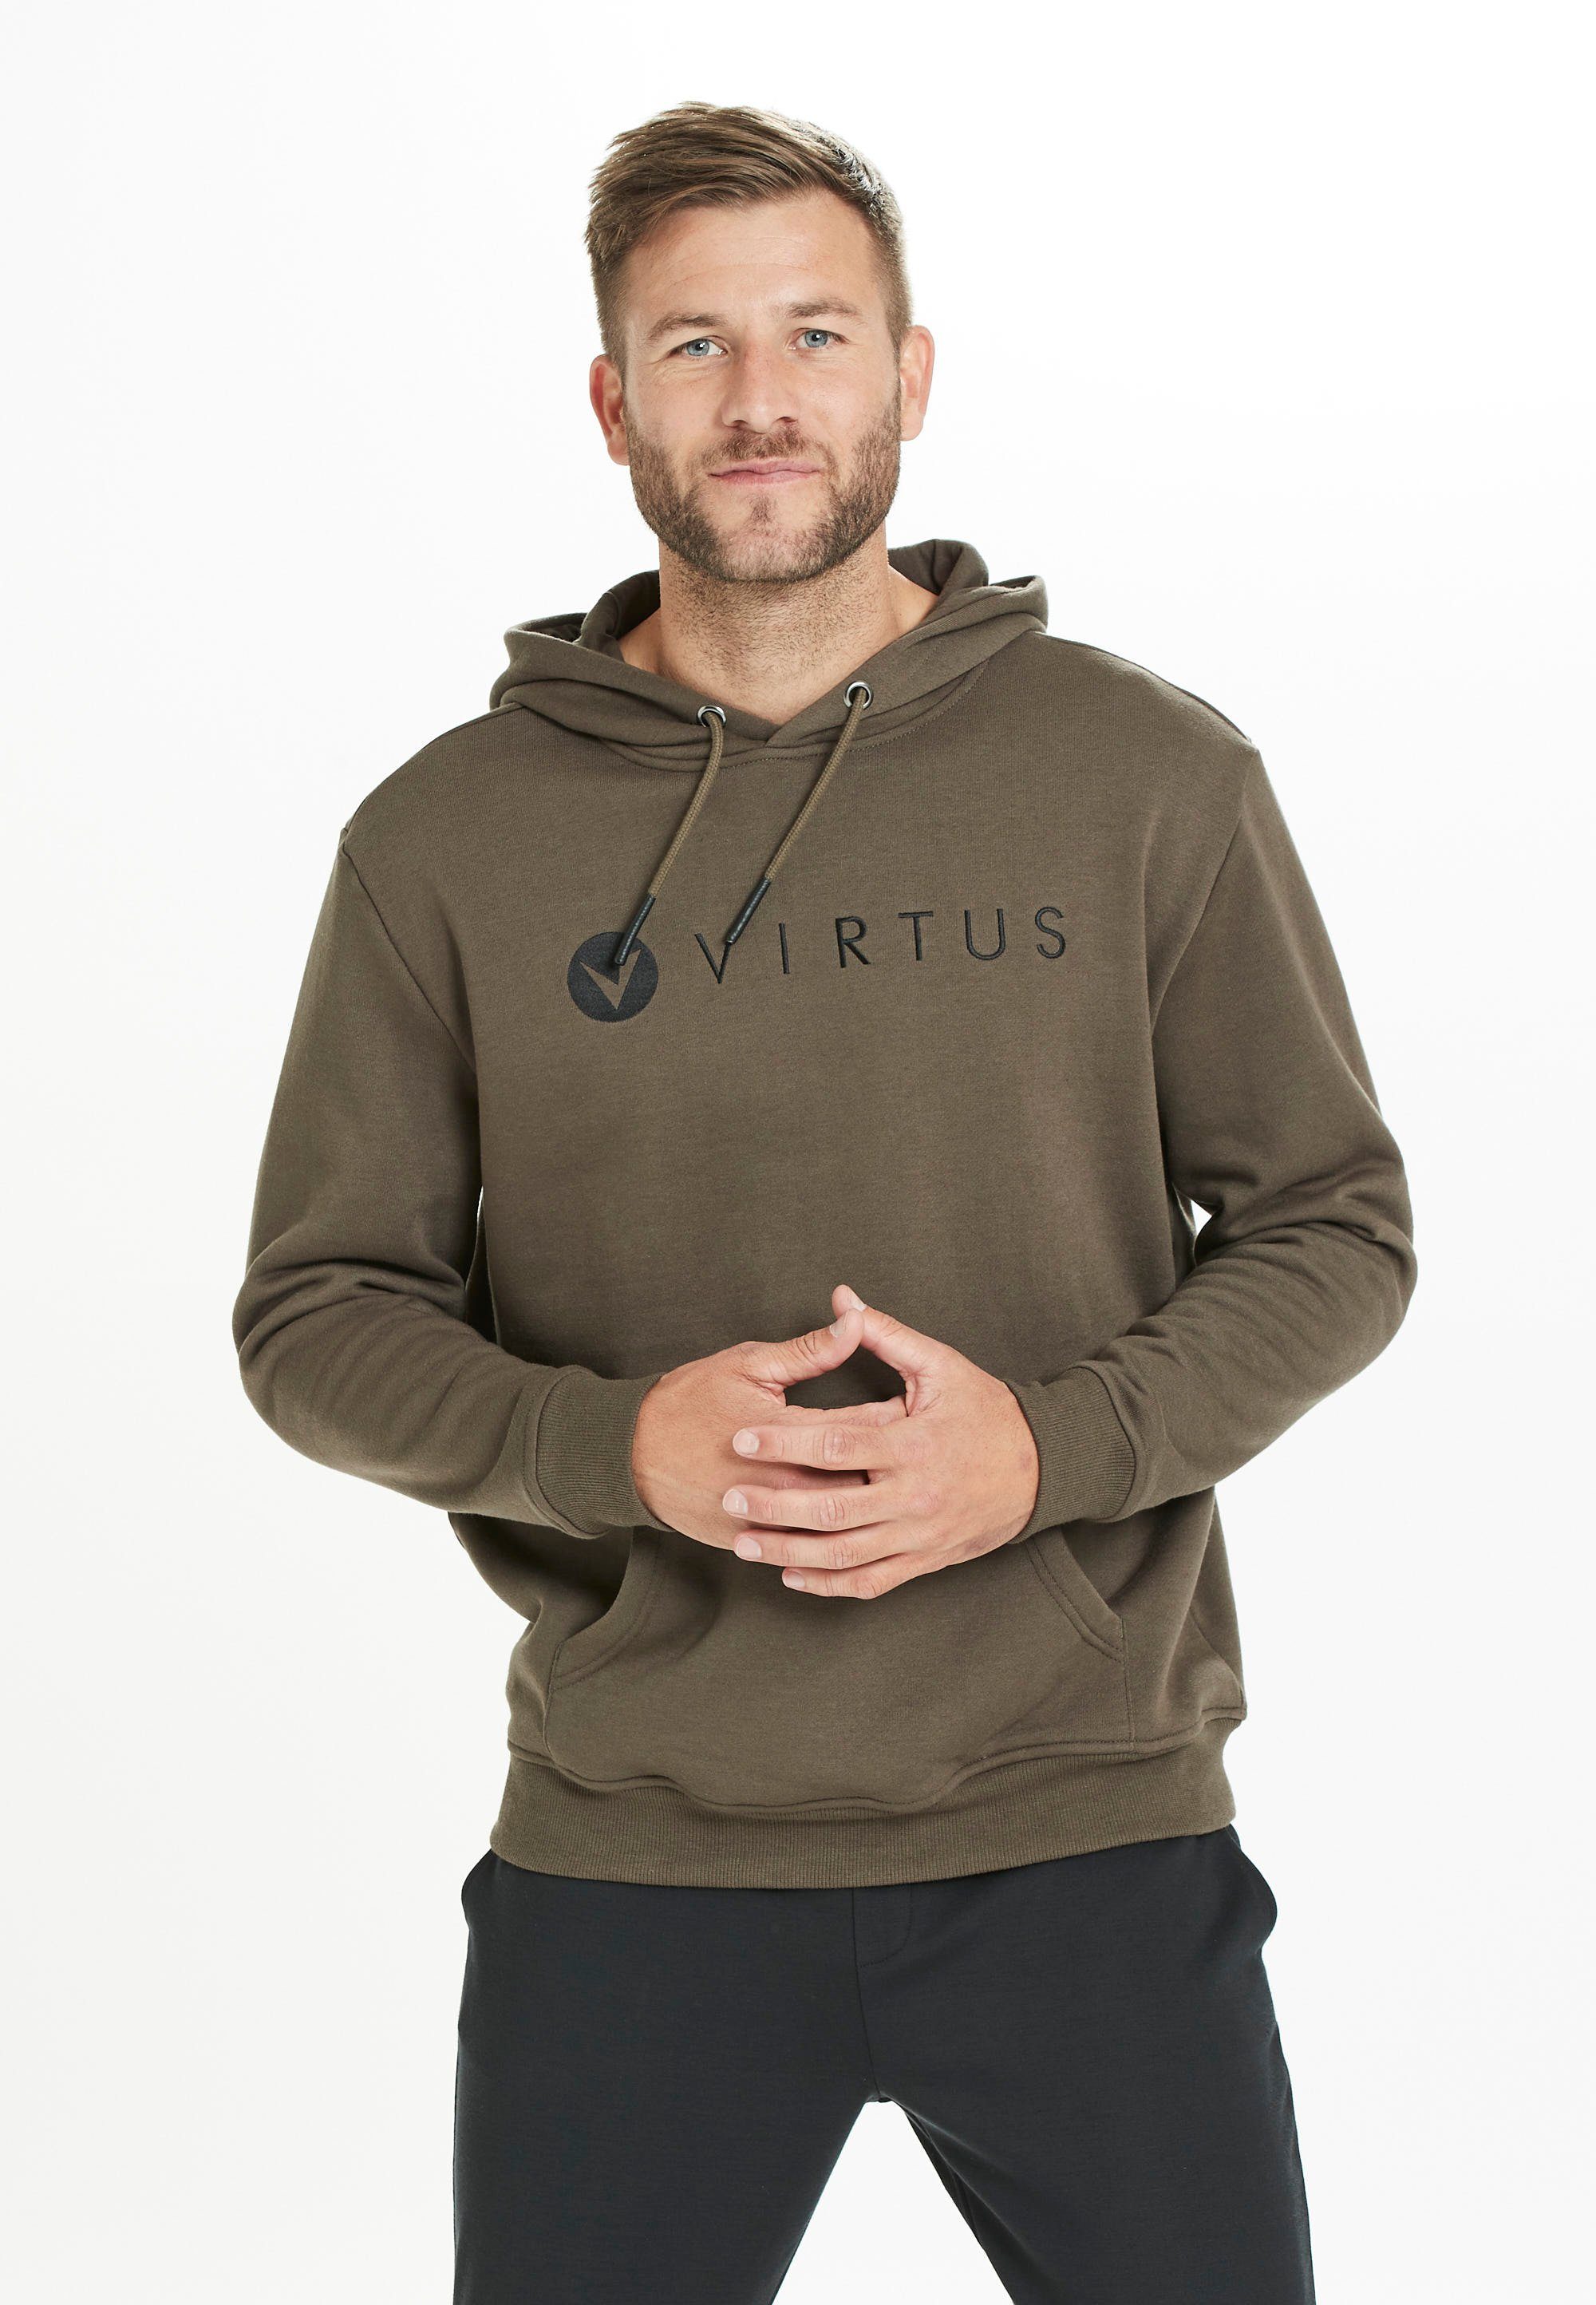 Virtus Kapuzensweatshirt Matis V2 mit coolem Markenprint dunkelgrün-schwarz